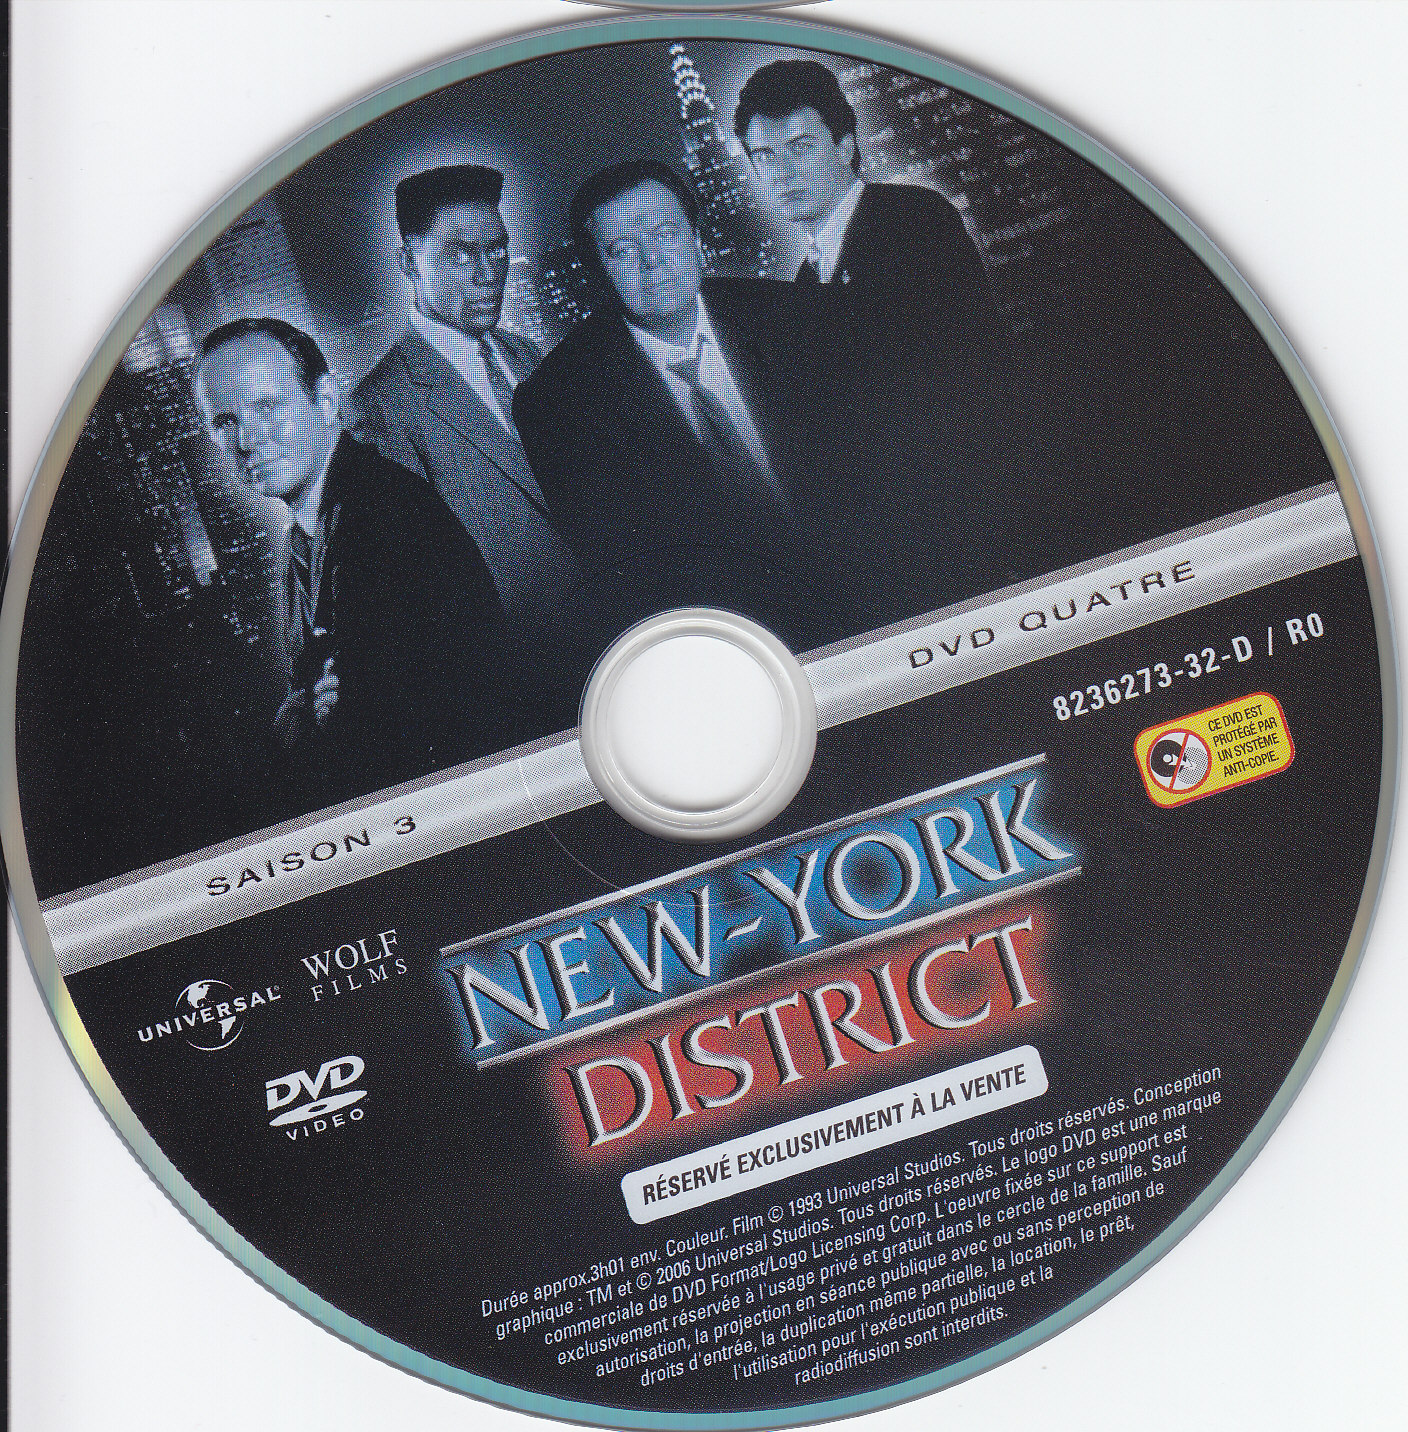 New York district Saison 3 DISC 4